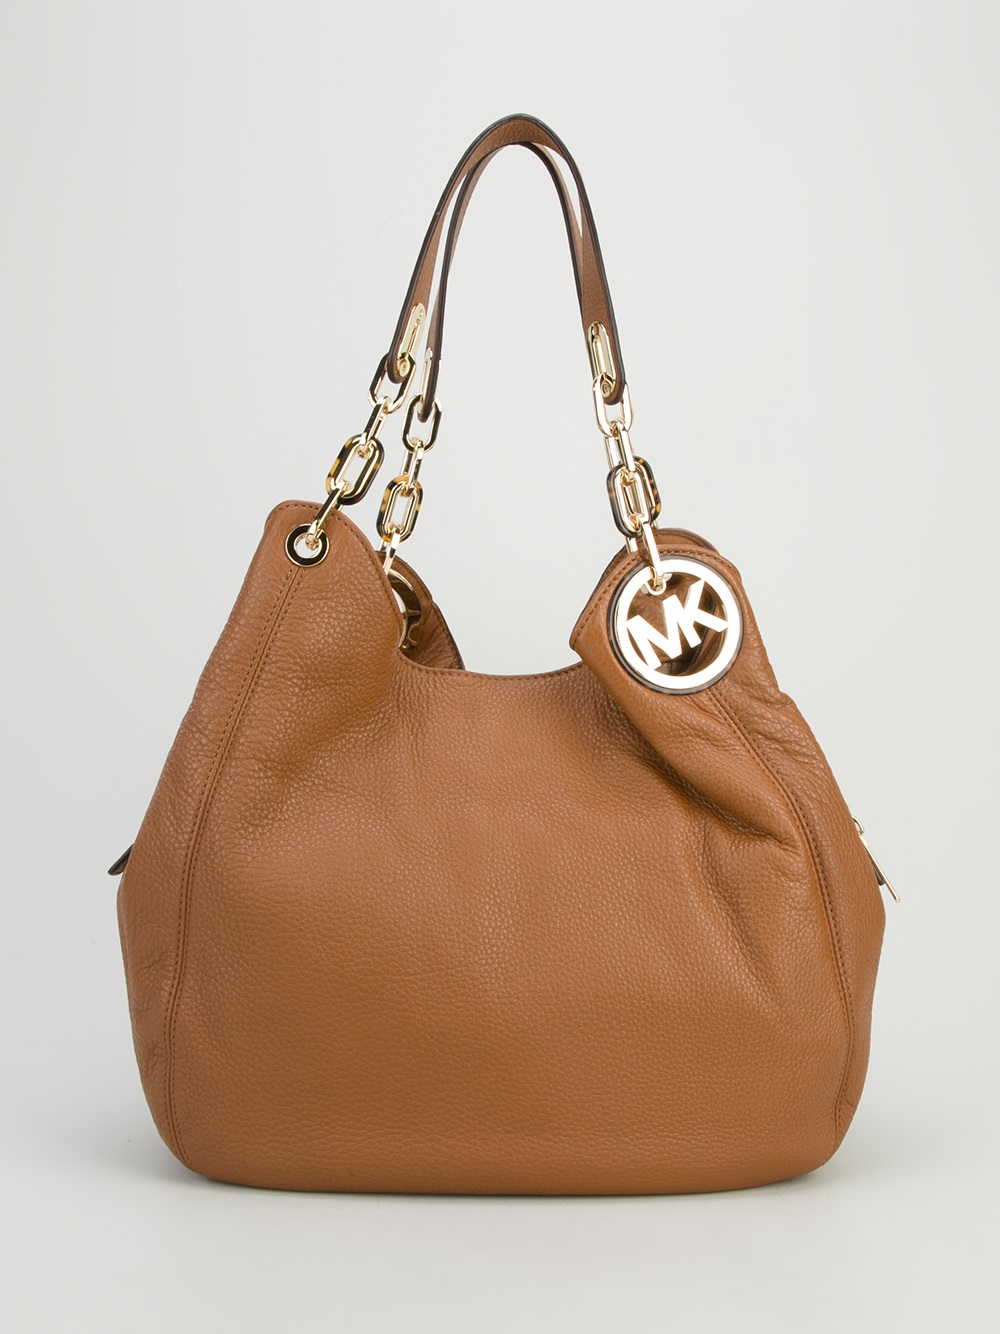 Women's Brown Michael Kors Handbags, Bags & Purses